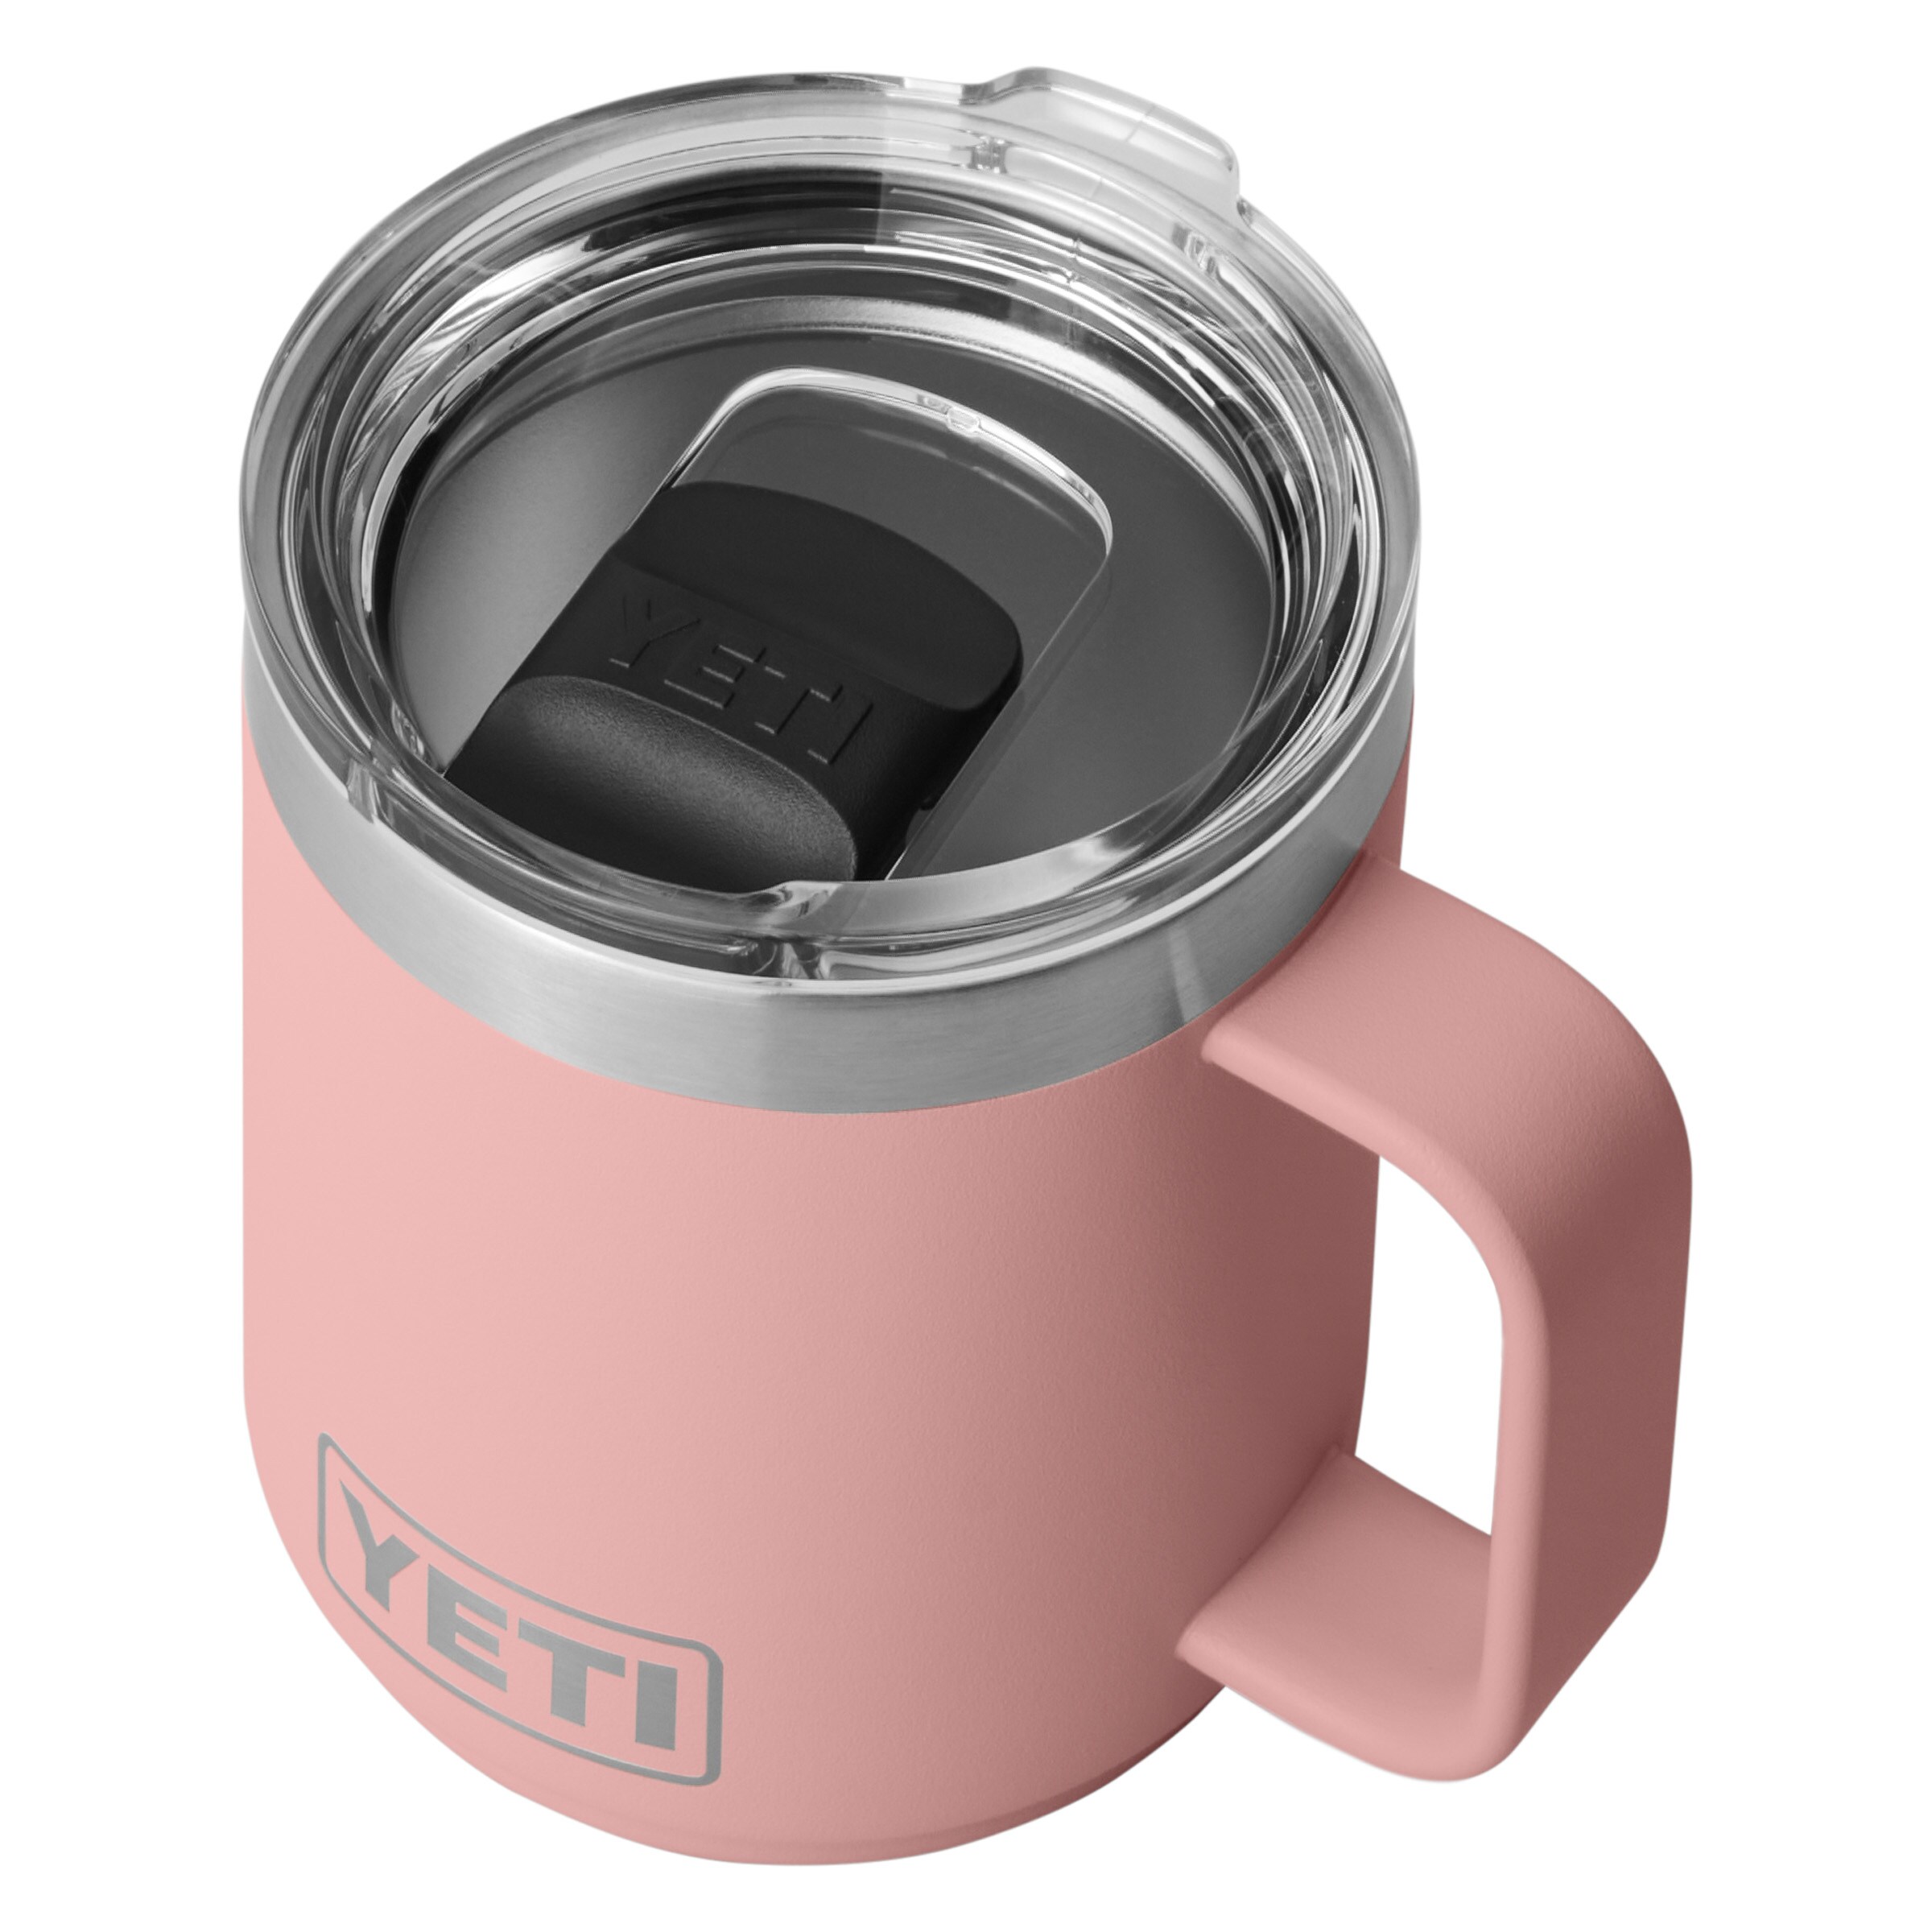 YETI® Rambler® 10 oz (295ml) Stackable Mug with MagSlider™ Lid Black